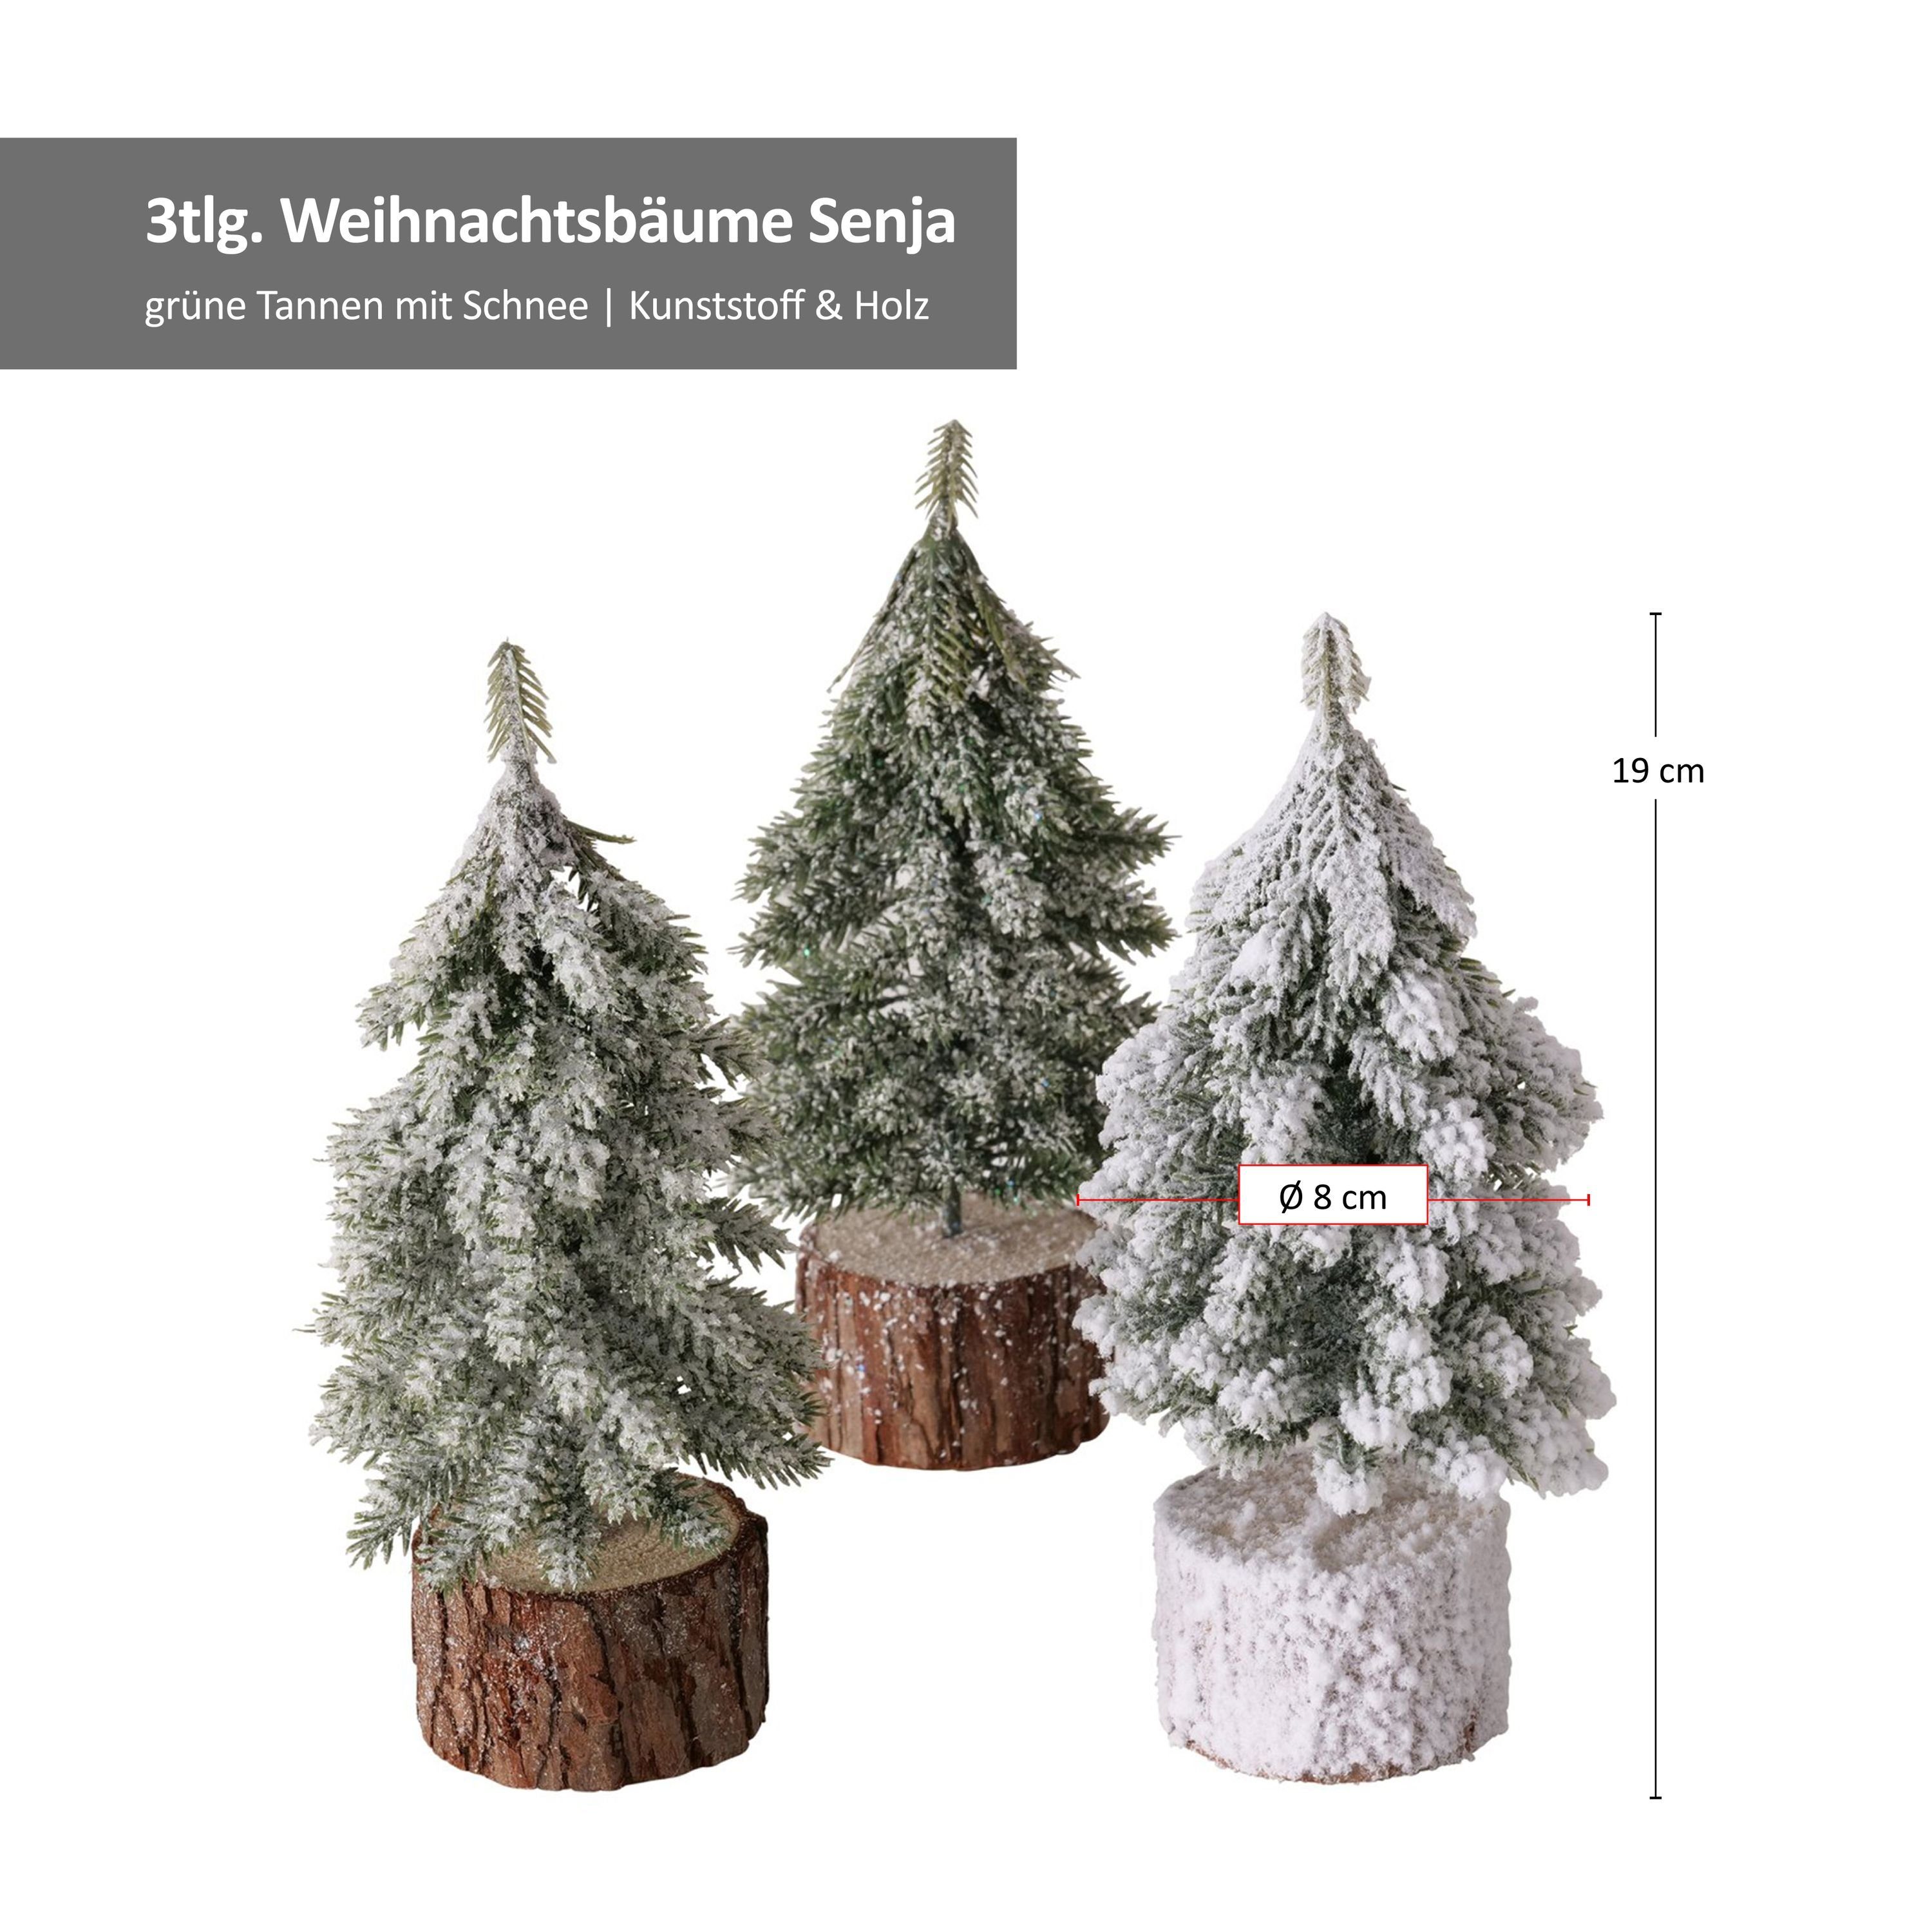 Set 2027155 MamboCat Deko-Weihnachtsbaum 3tlg. B./2 Senja - Dekofigur